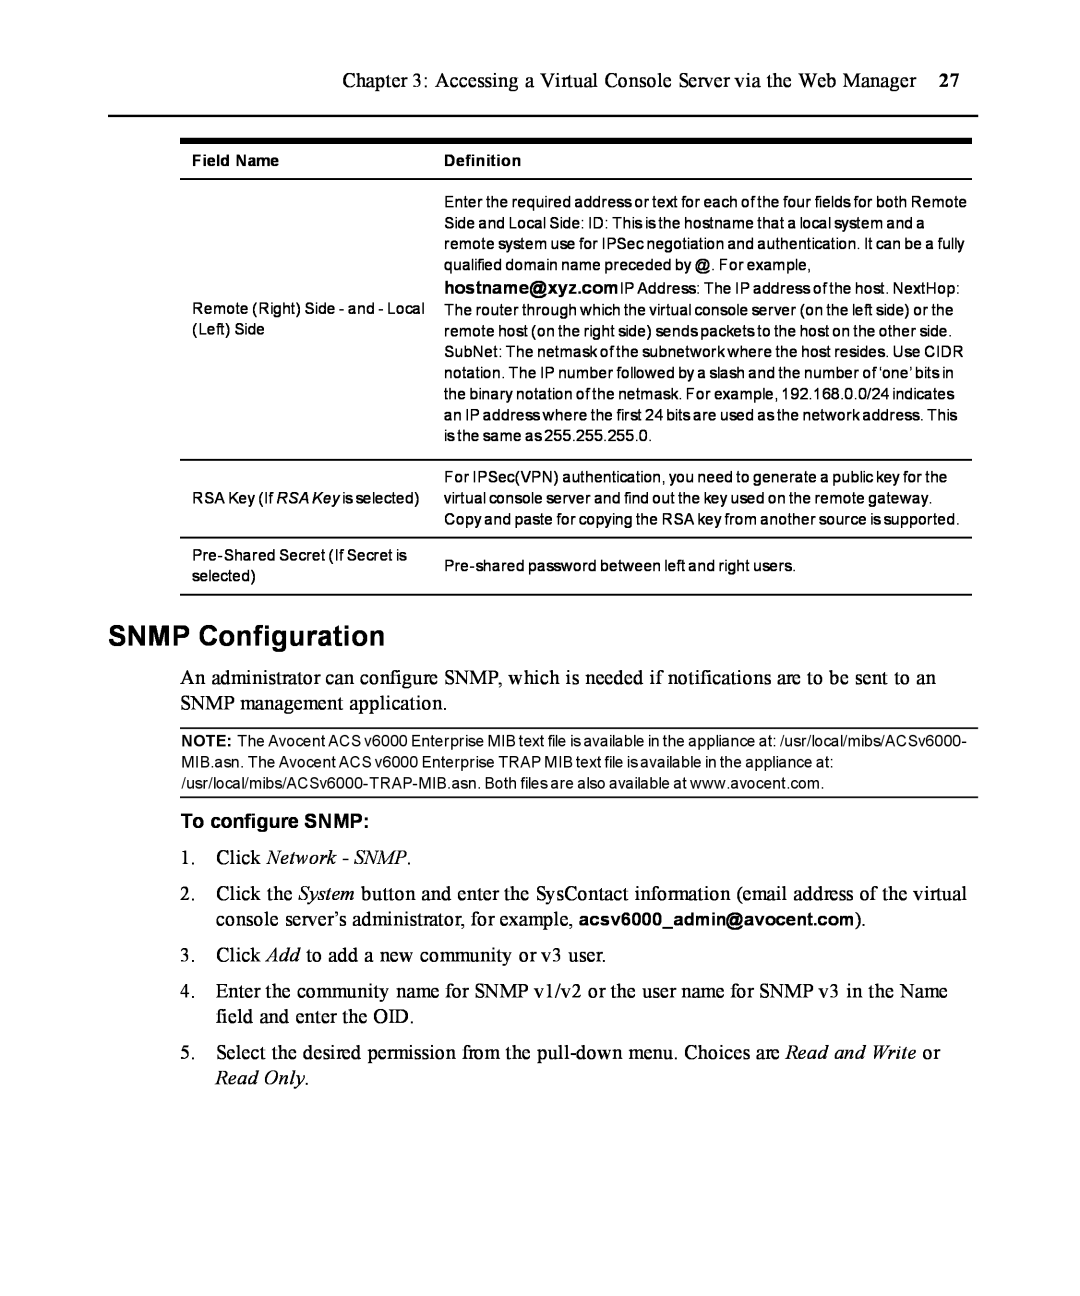 Casio ACS V6000 manual SNMP Configuration, To configure SNMP, Click Network - SNMP 